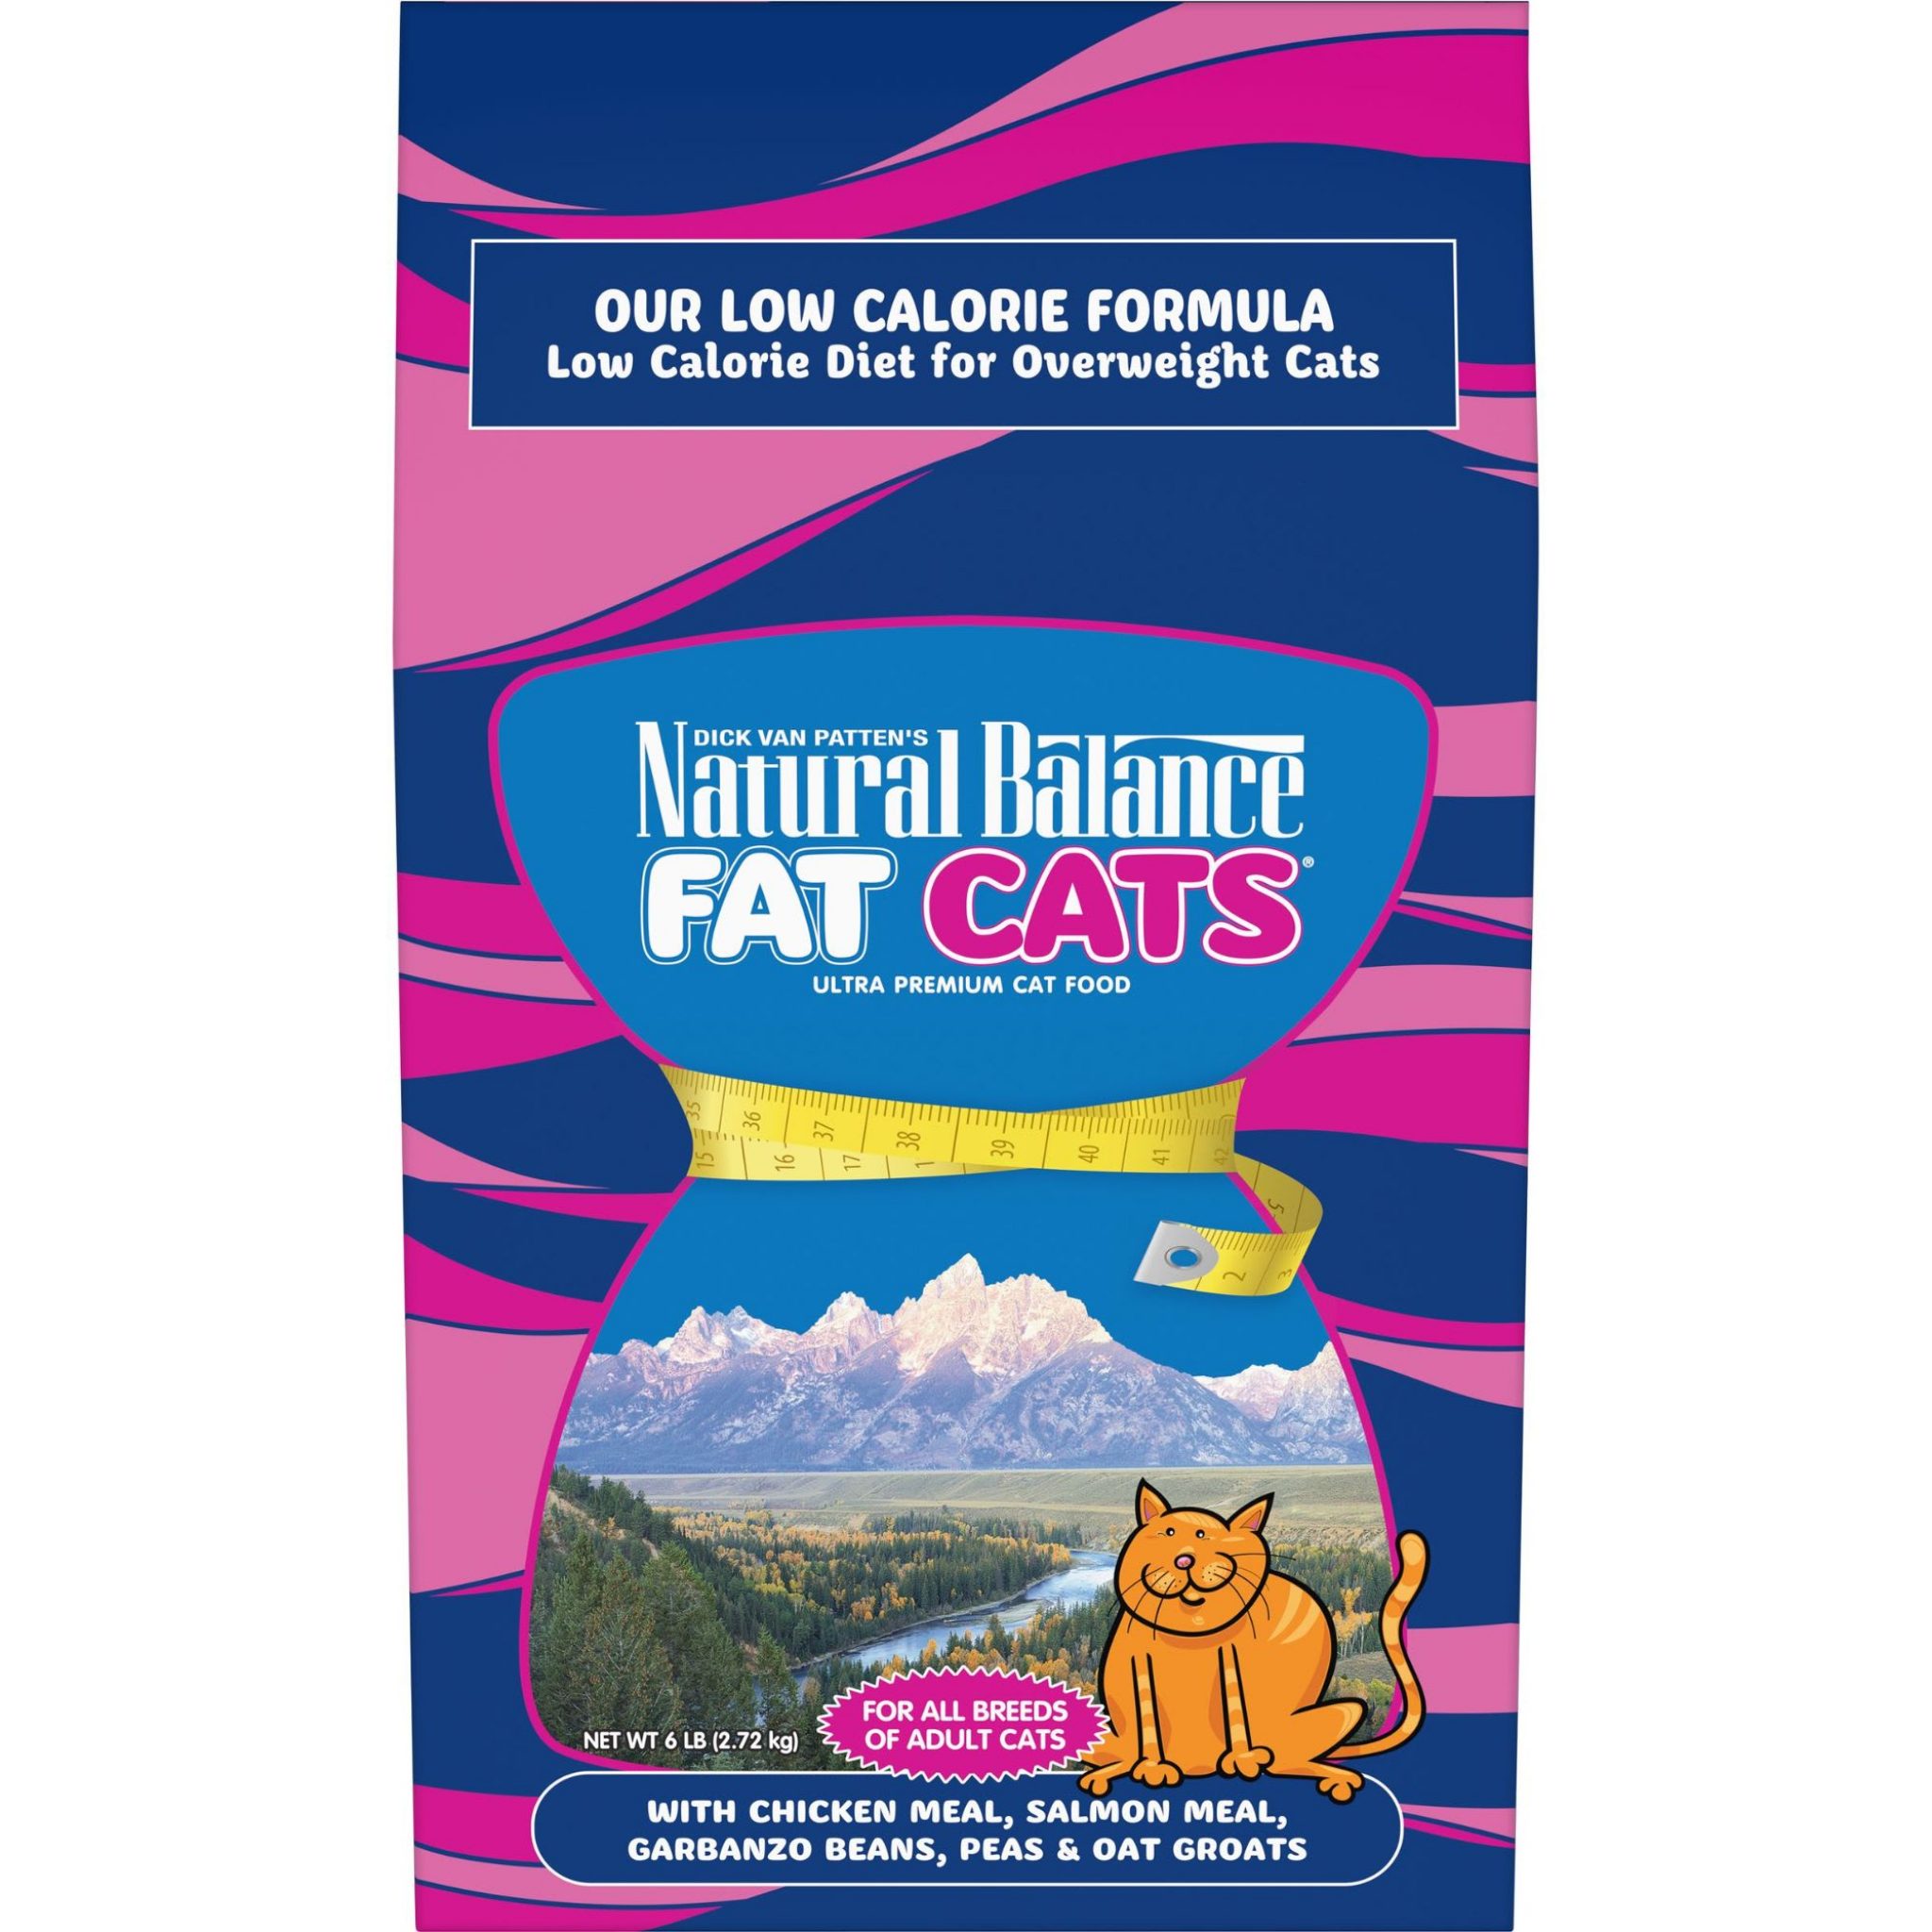 natural balance fat cats review